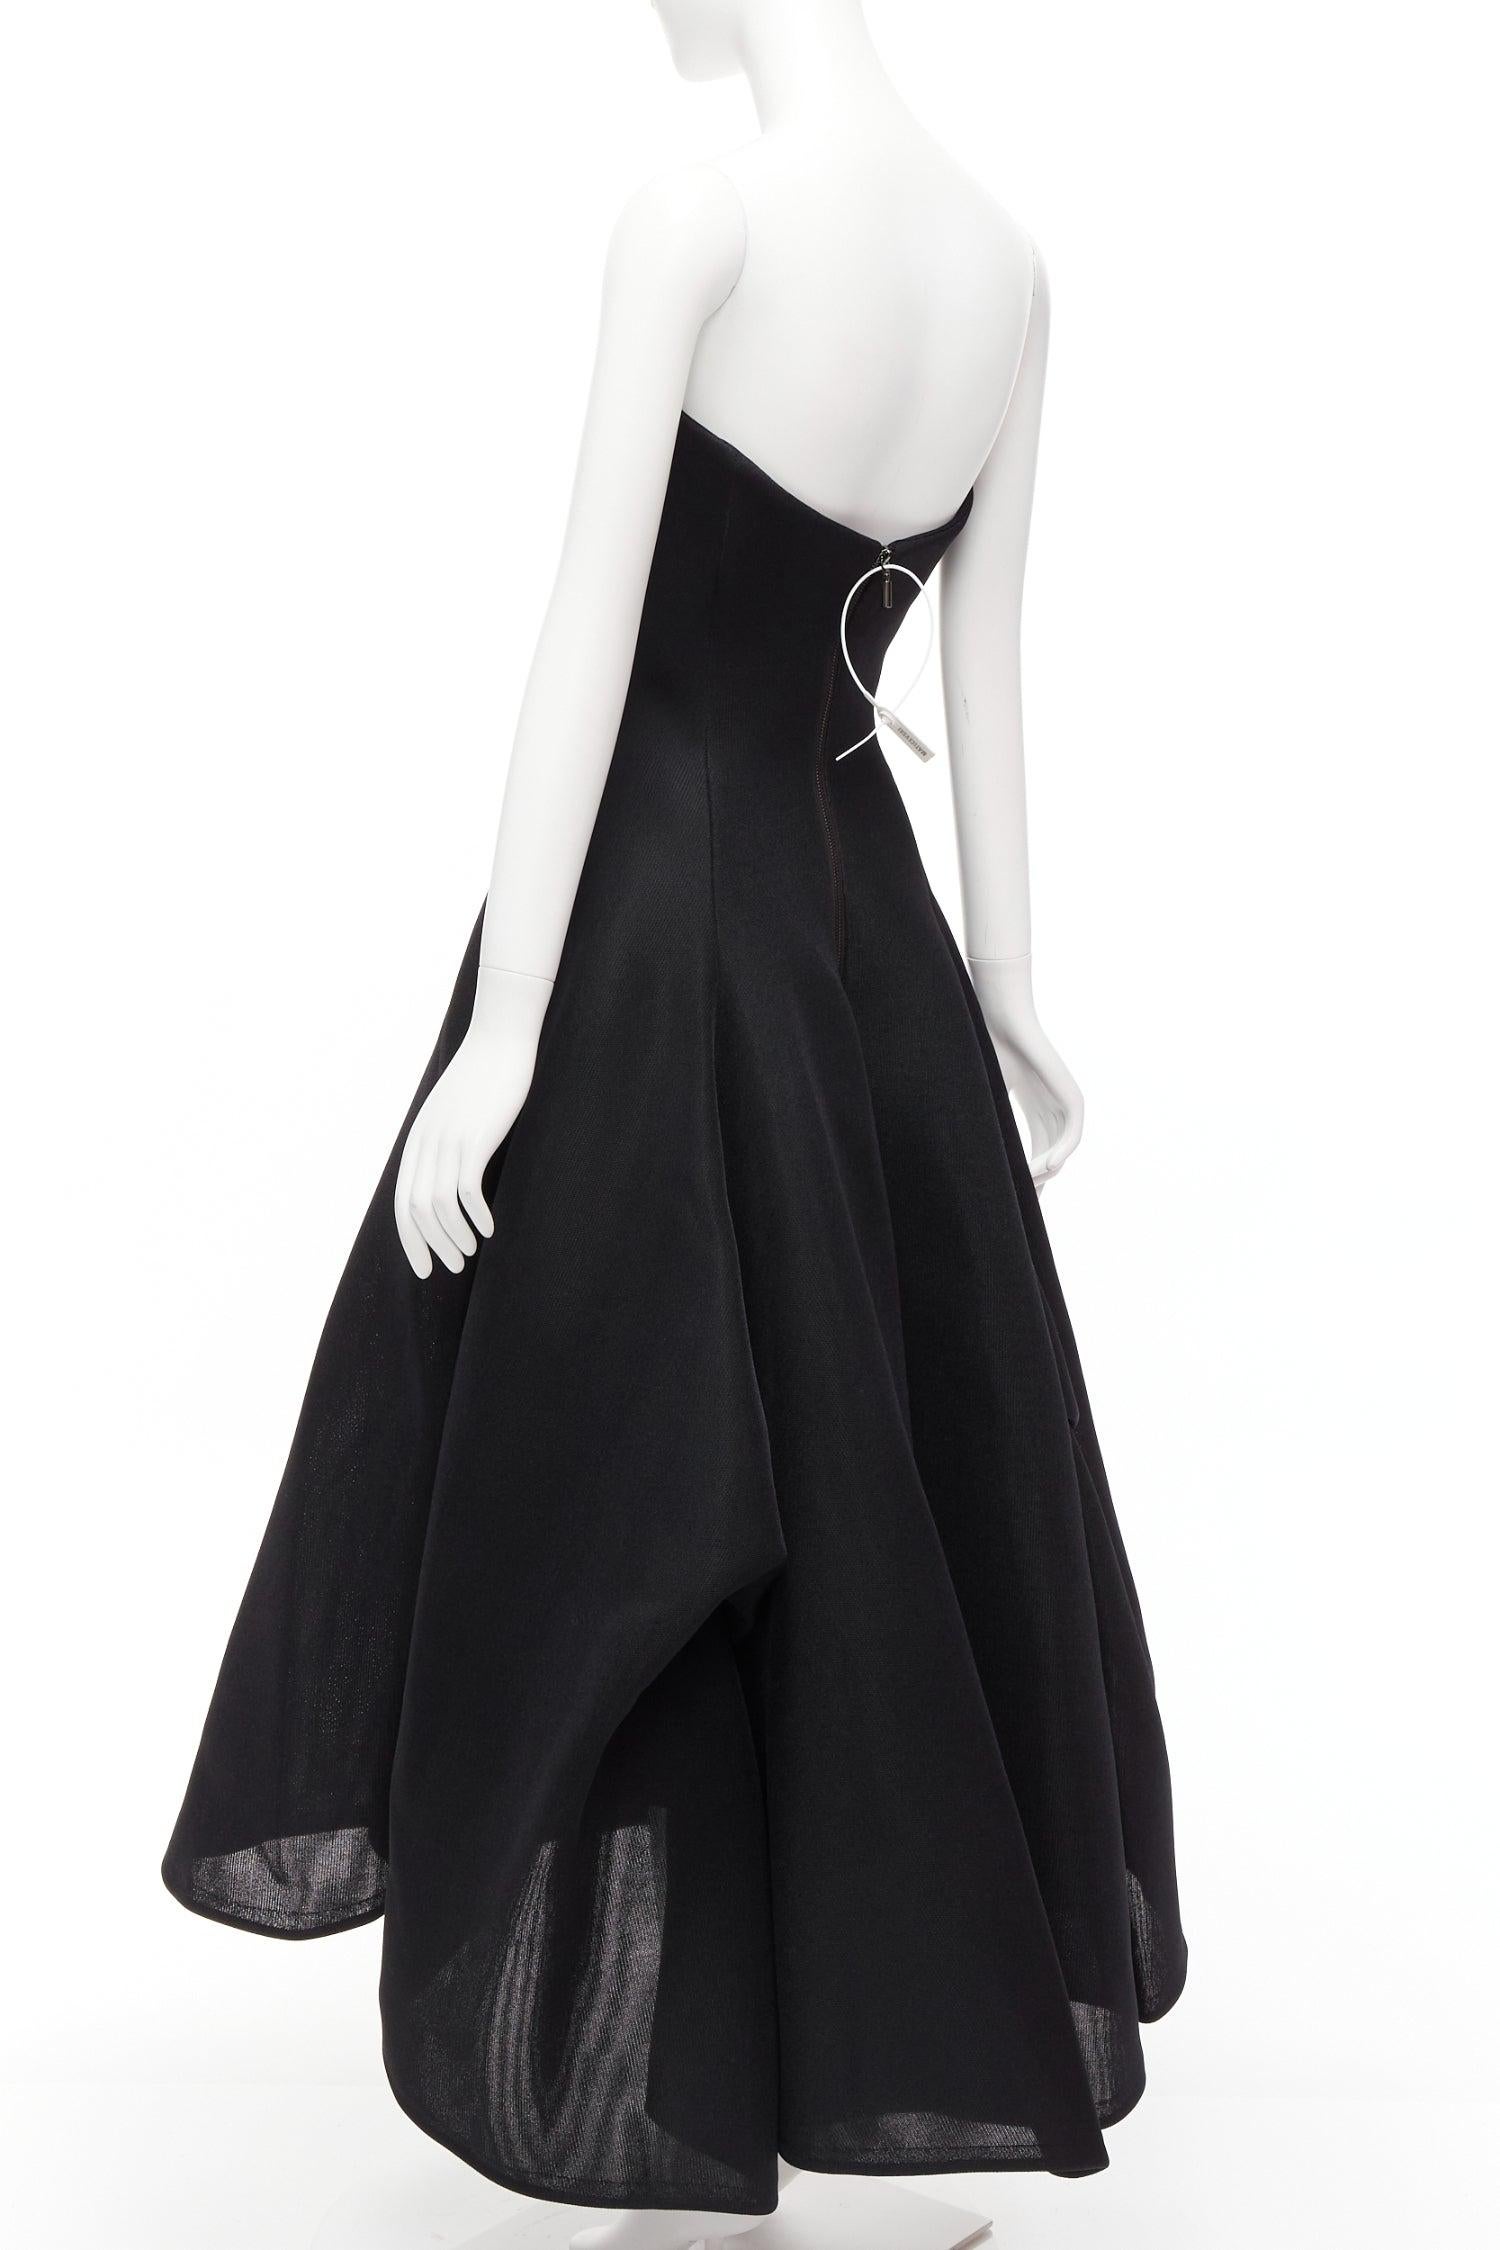 MATICEVSKI 2018 Ornament black peak bust boned corset midi gown AU8 M 1